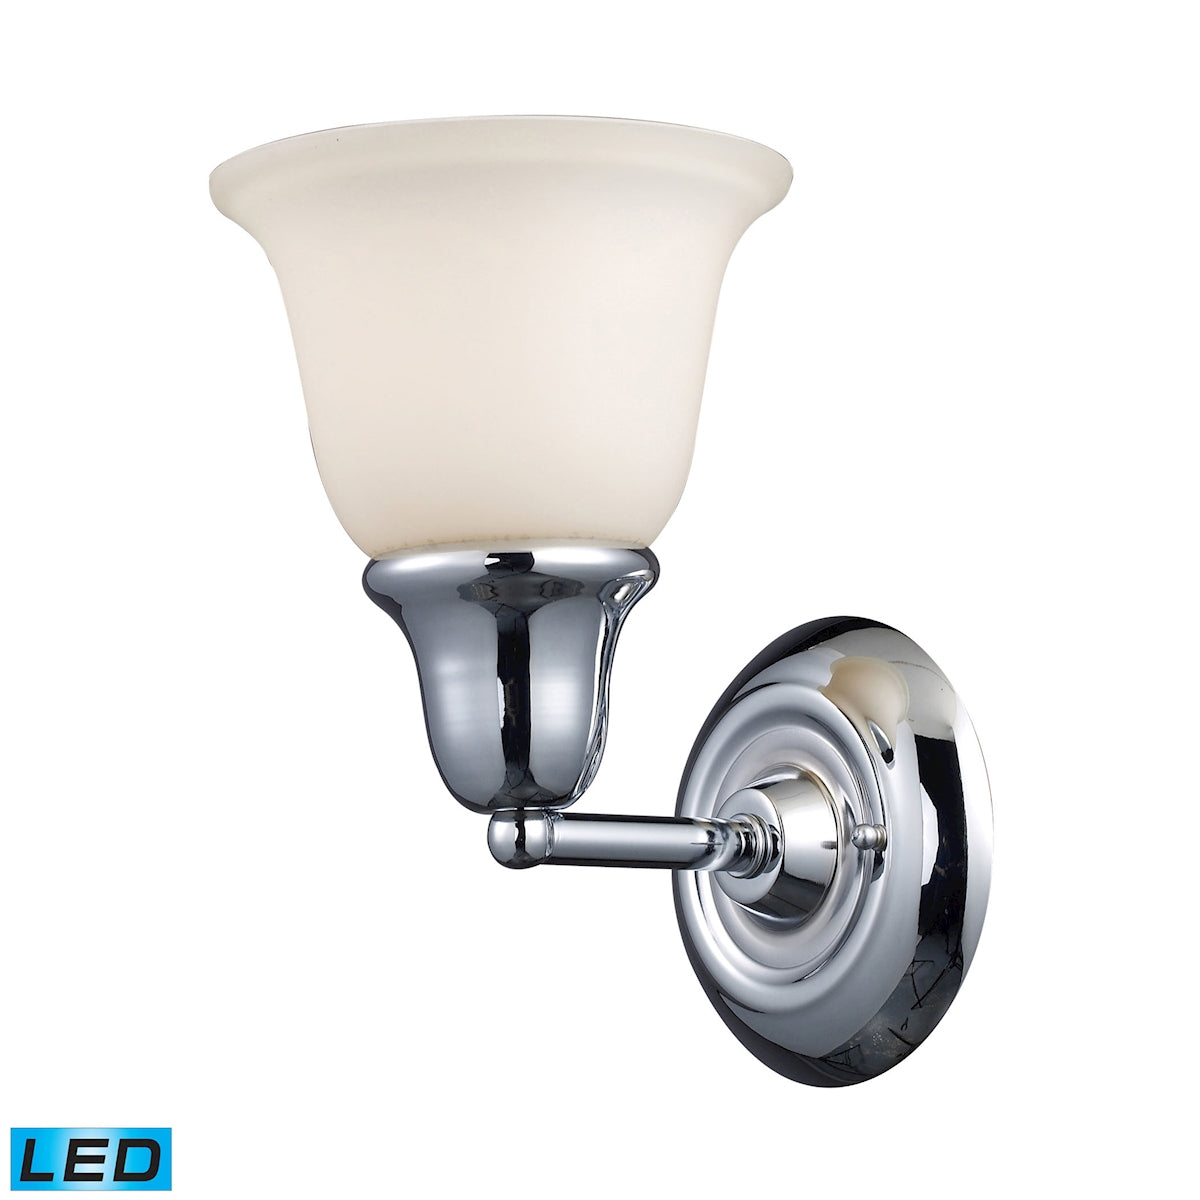 ELK Lighting 67010-1-LED Berwick 1-Light Vanity Lamp in Polished Chrome with White Glass - Includes LED Bulb